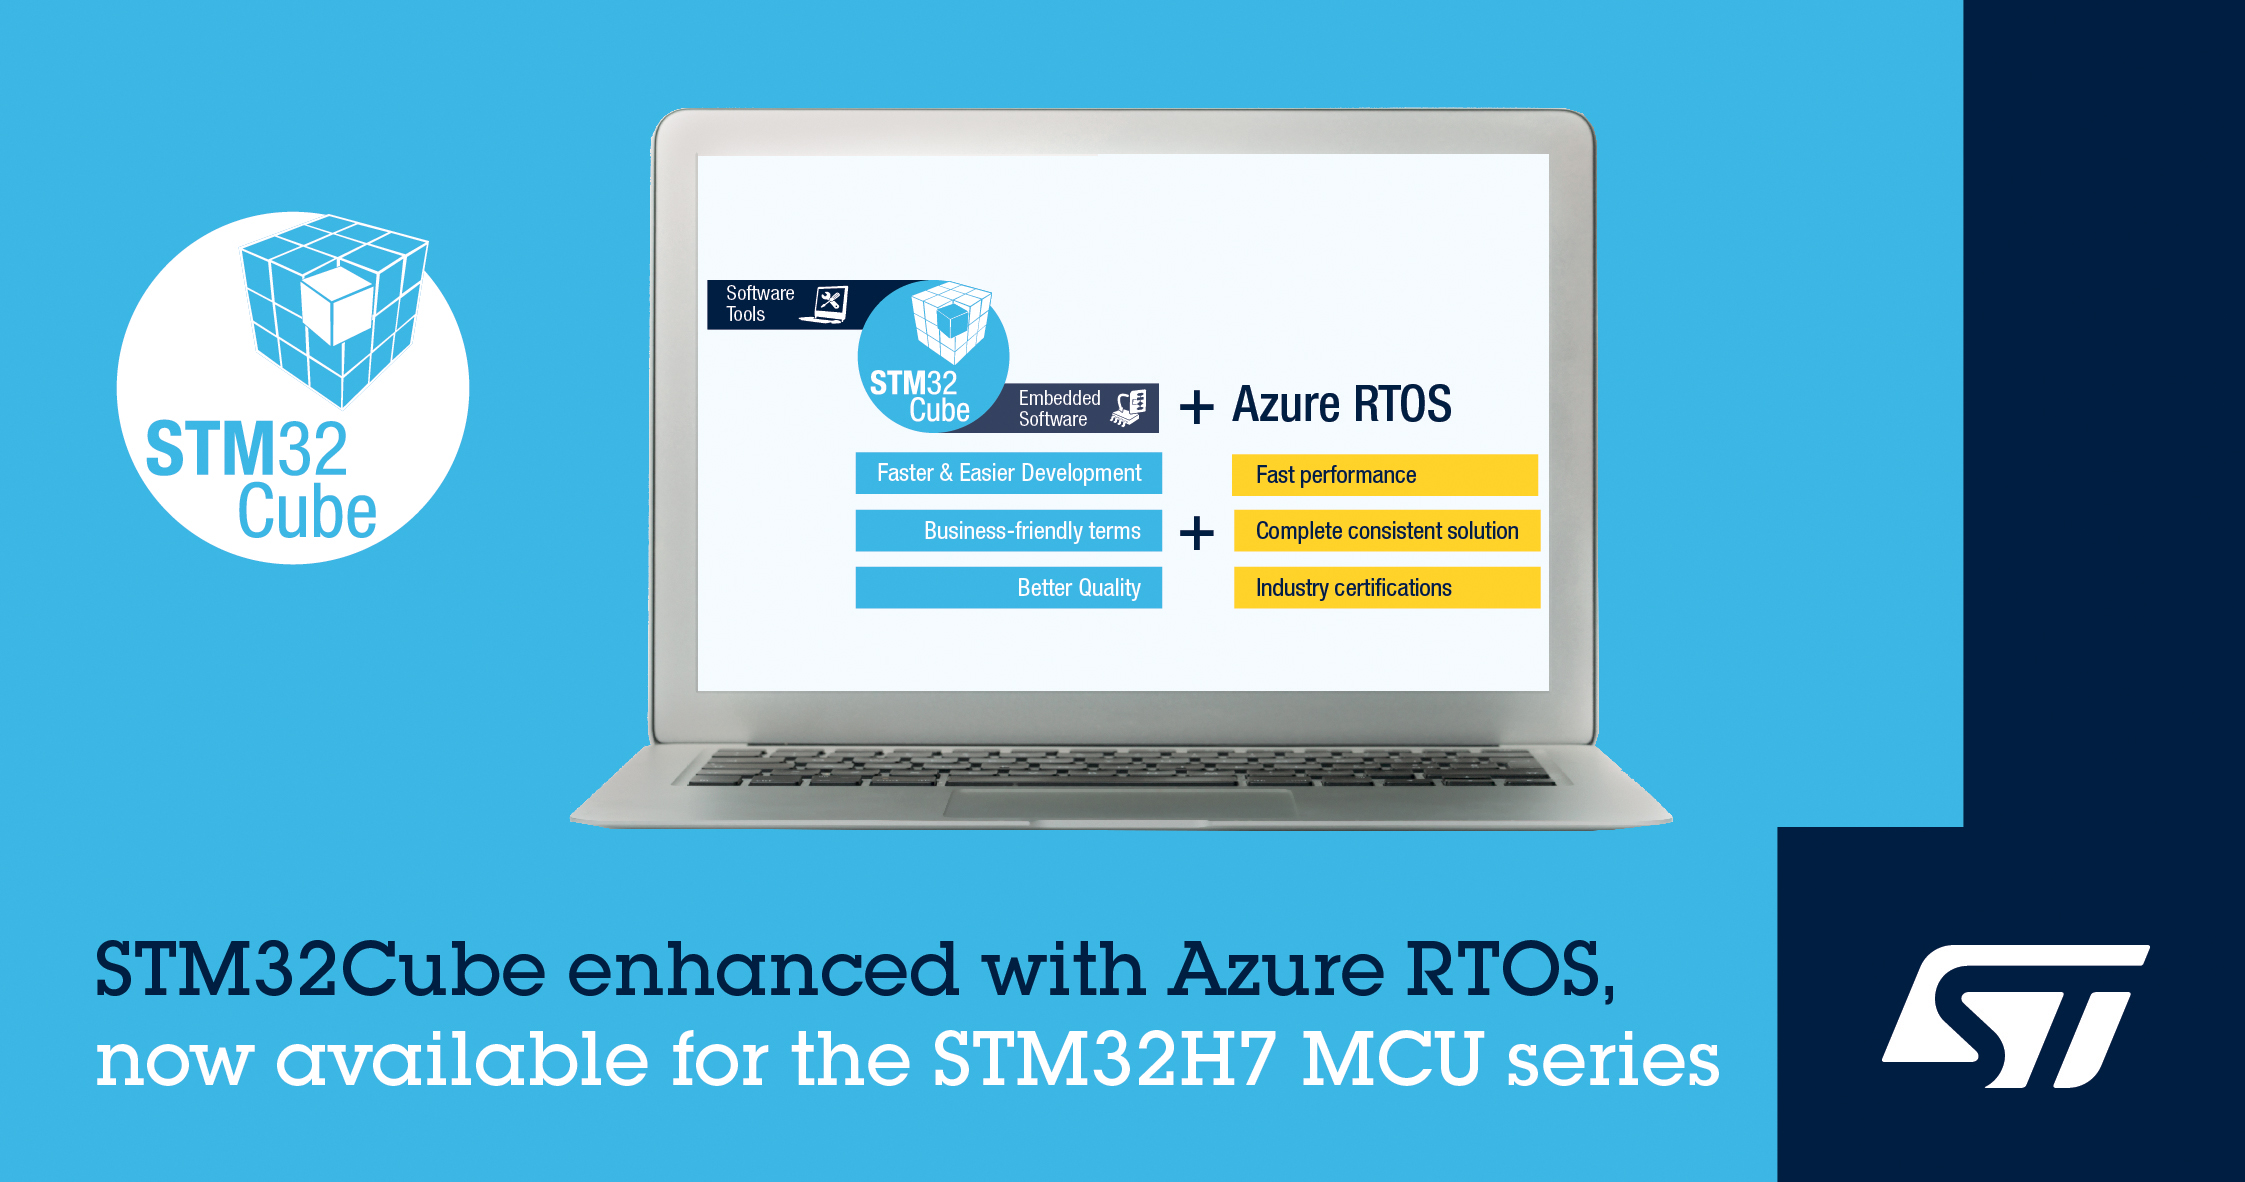 STマイクロエレクトロニクス、STM32マイコンとMicrosoft® Azure RTOSを活用したIoT機器の開発期間を短縮する新しいソフトウェアを発表